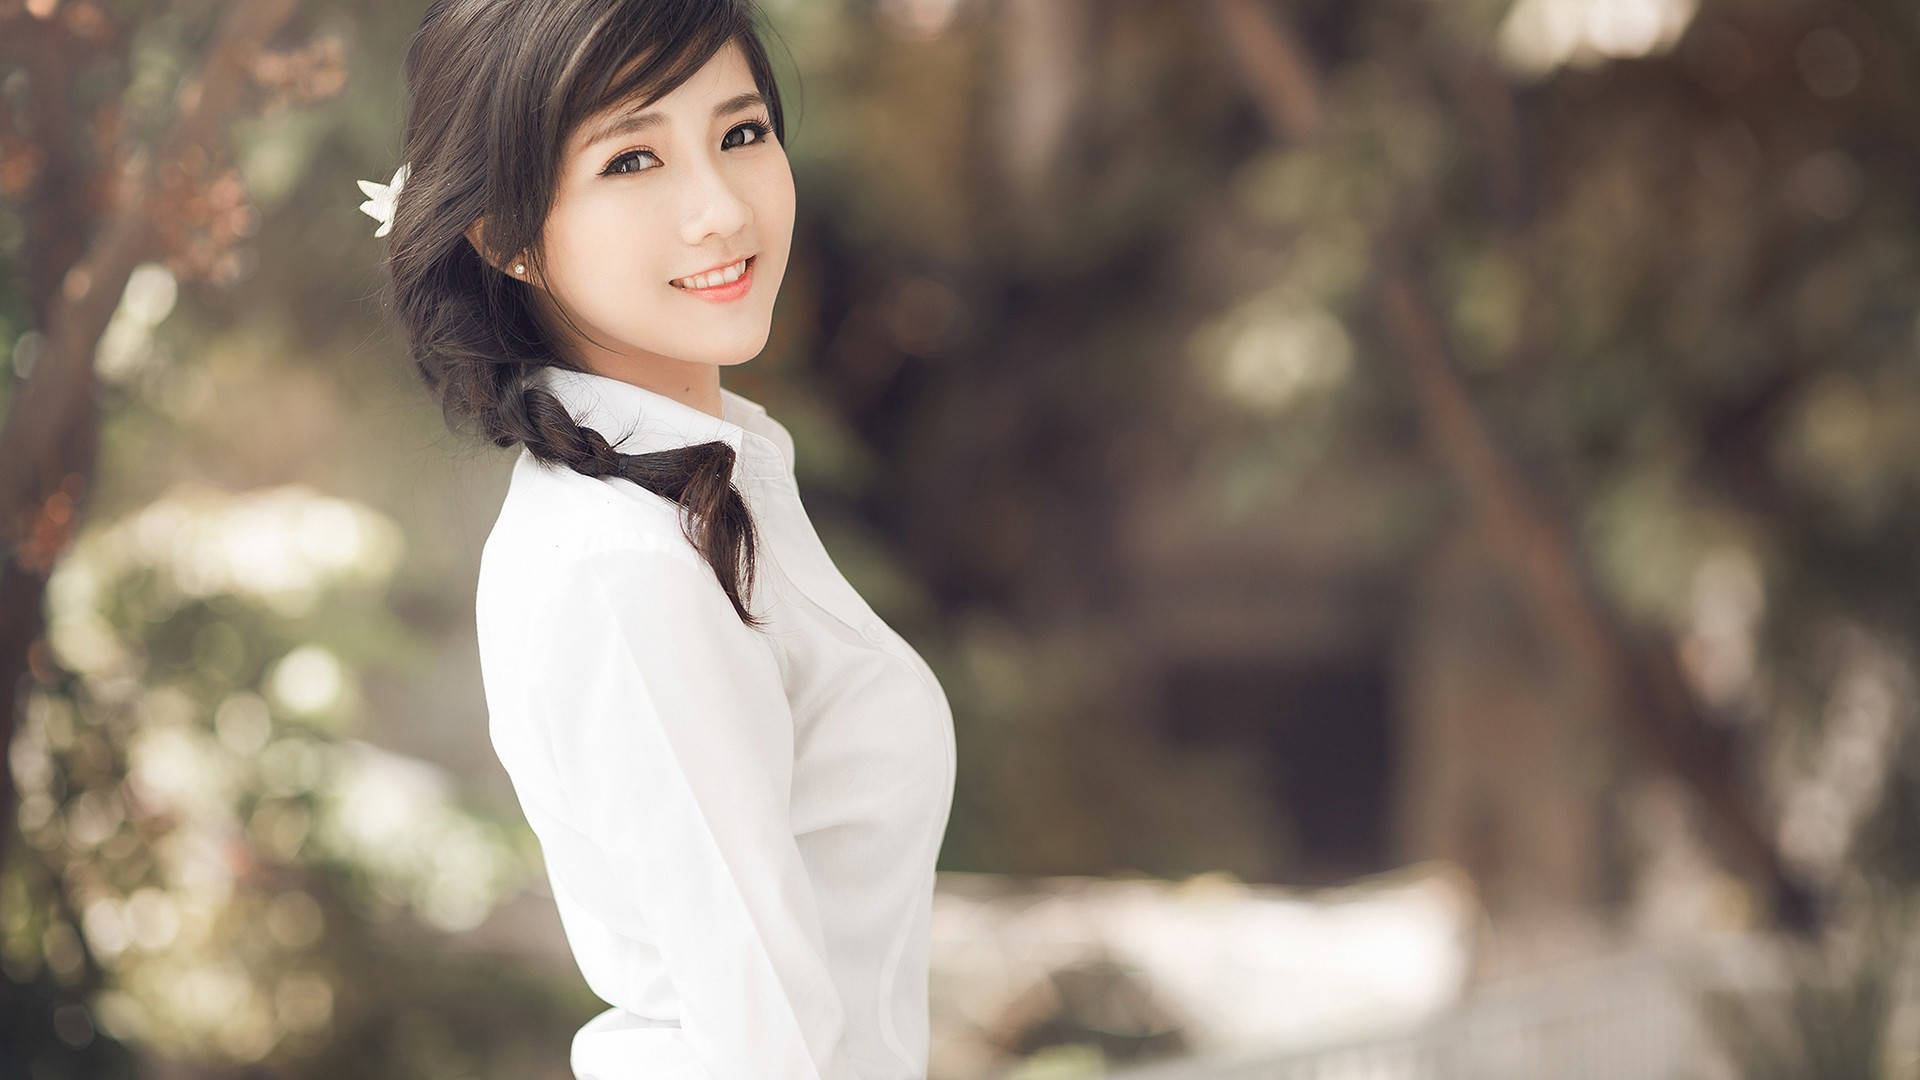 Asian Cute Girl With Black Hair Wallpaper